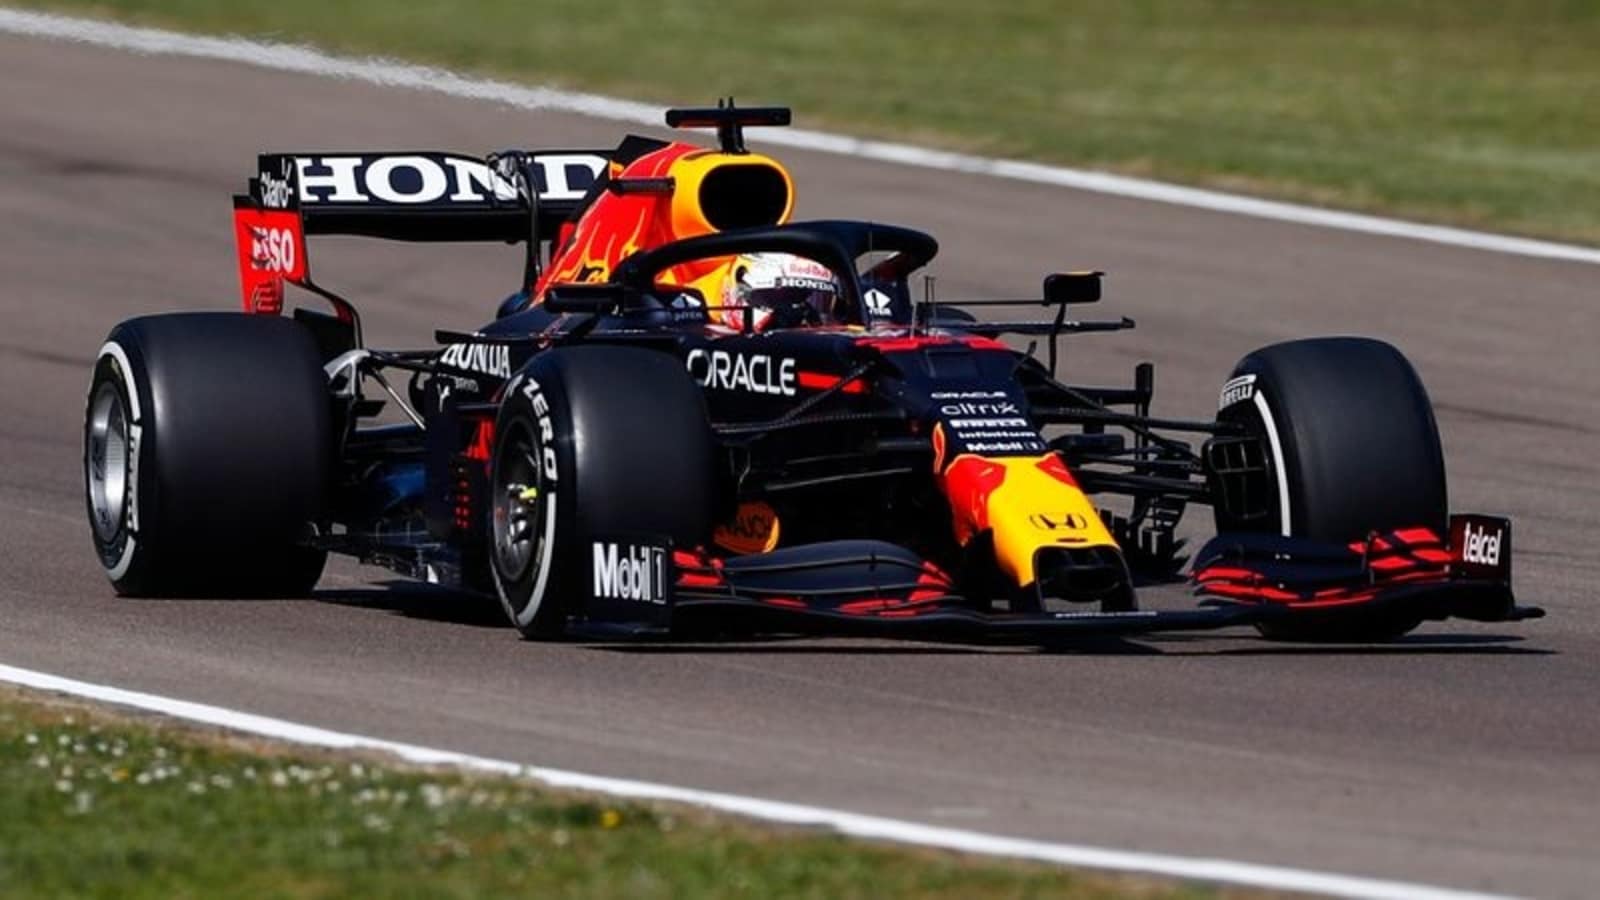 Max Verstappen quickest in final practice at Imola